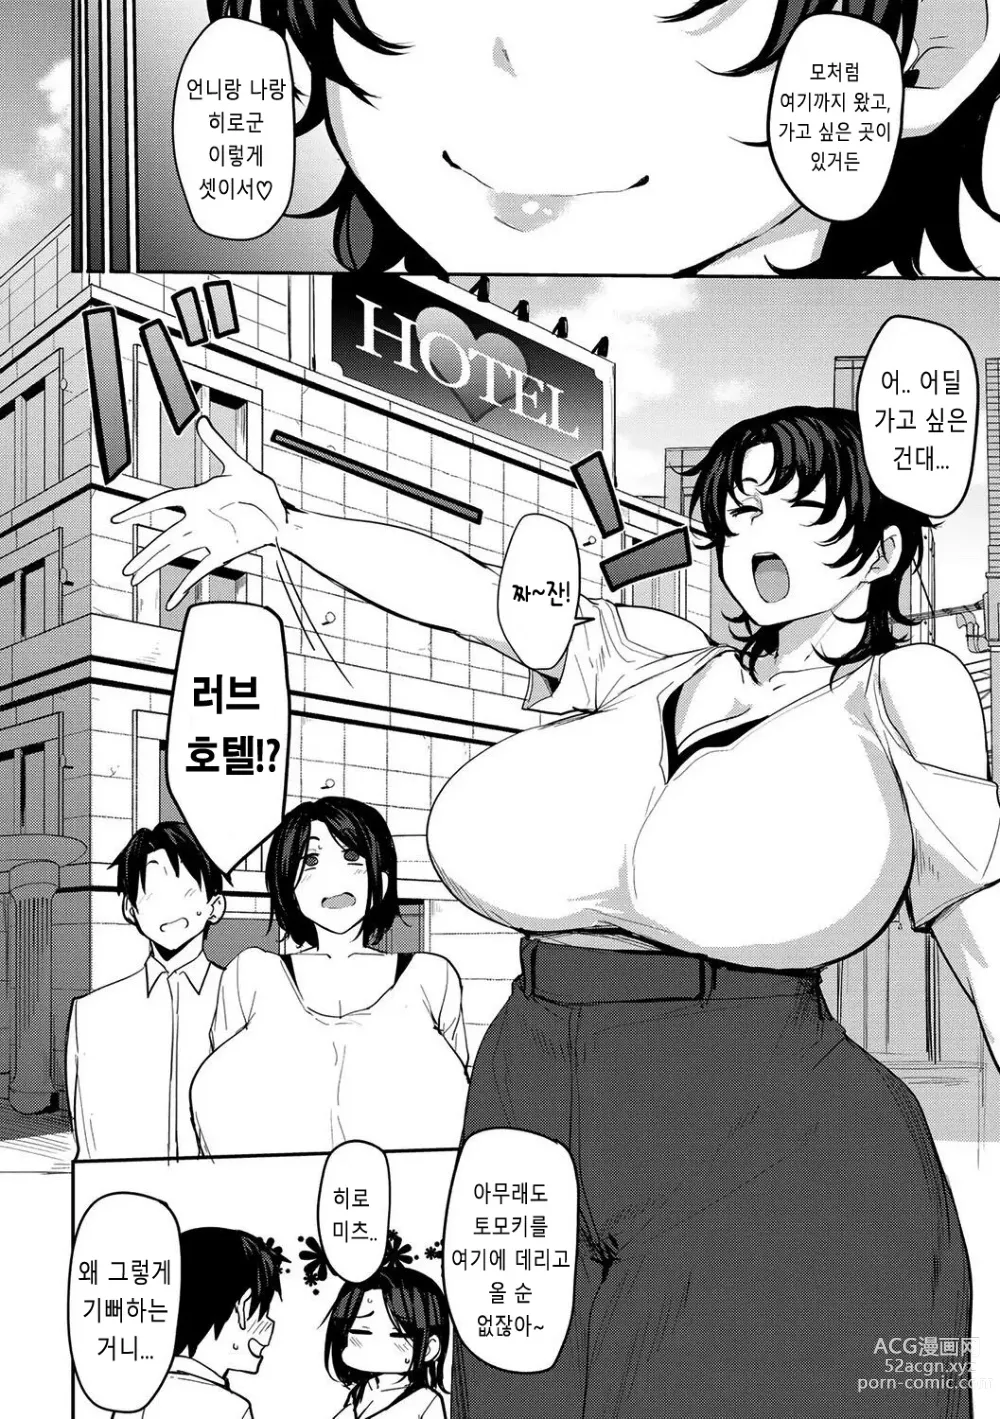 Page 2 of manga Soubo Koukan EXTRA ㅣ쌍모상간 EXTRA